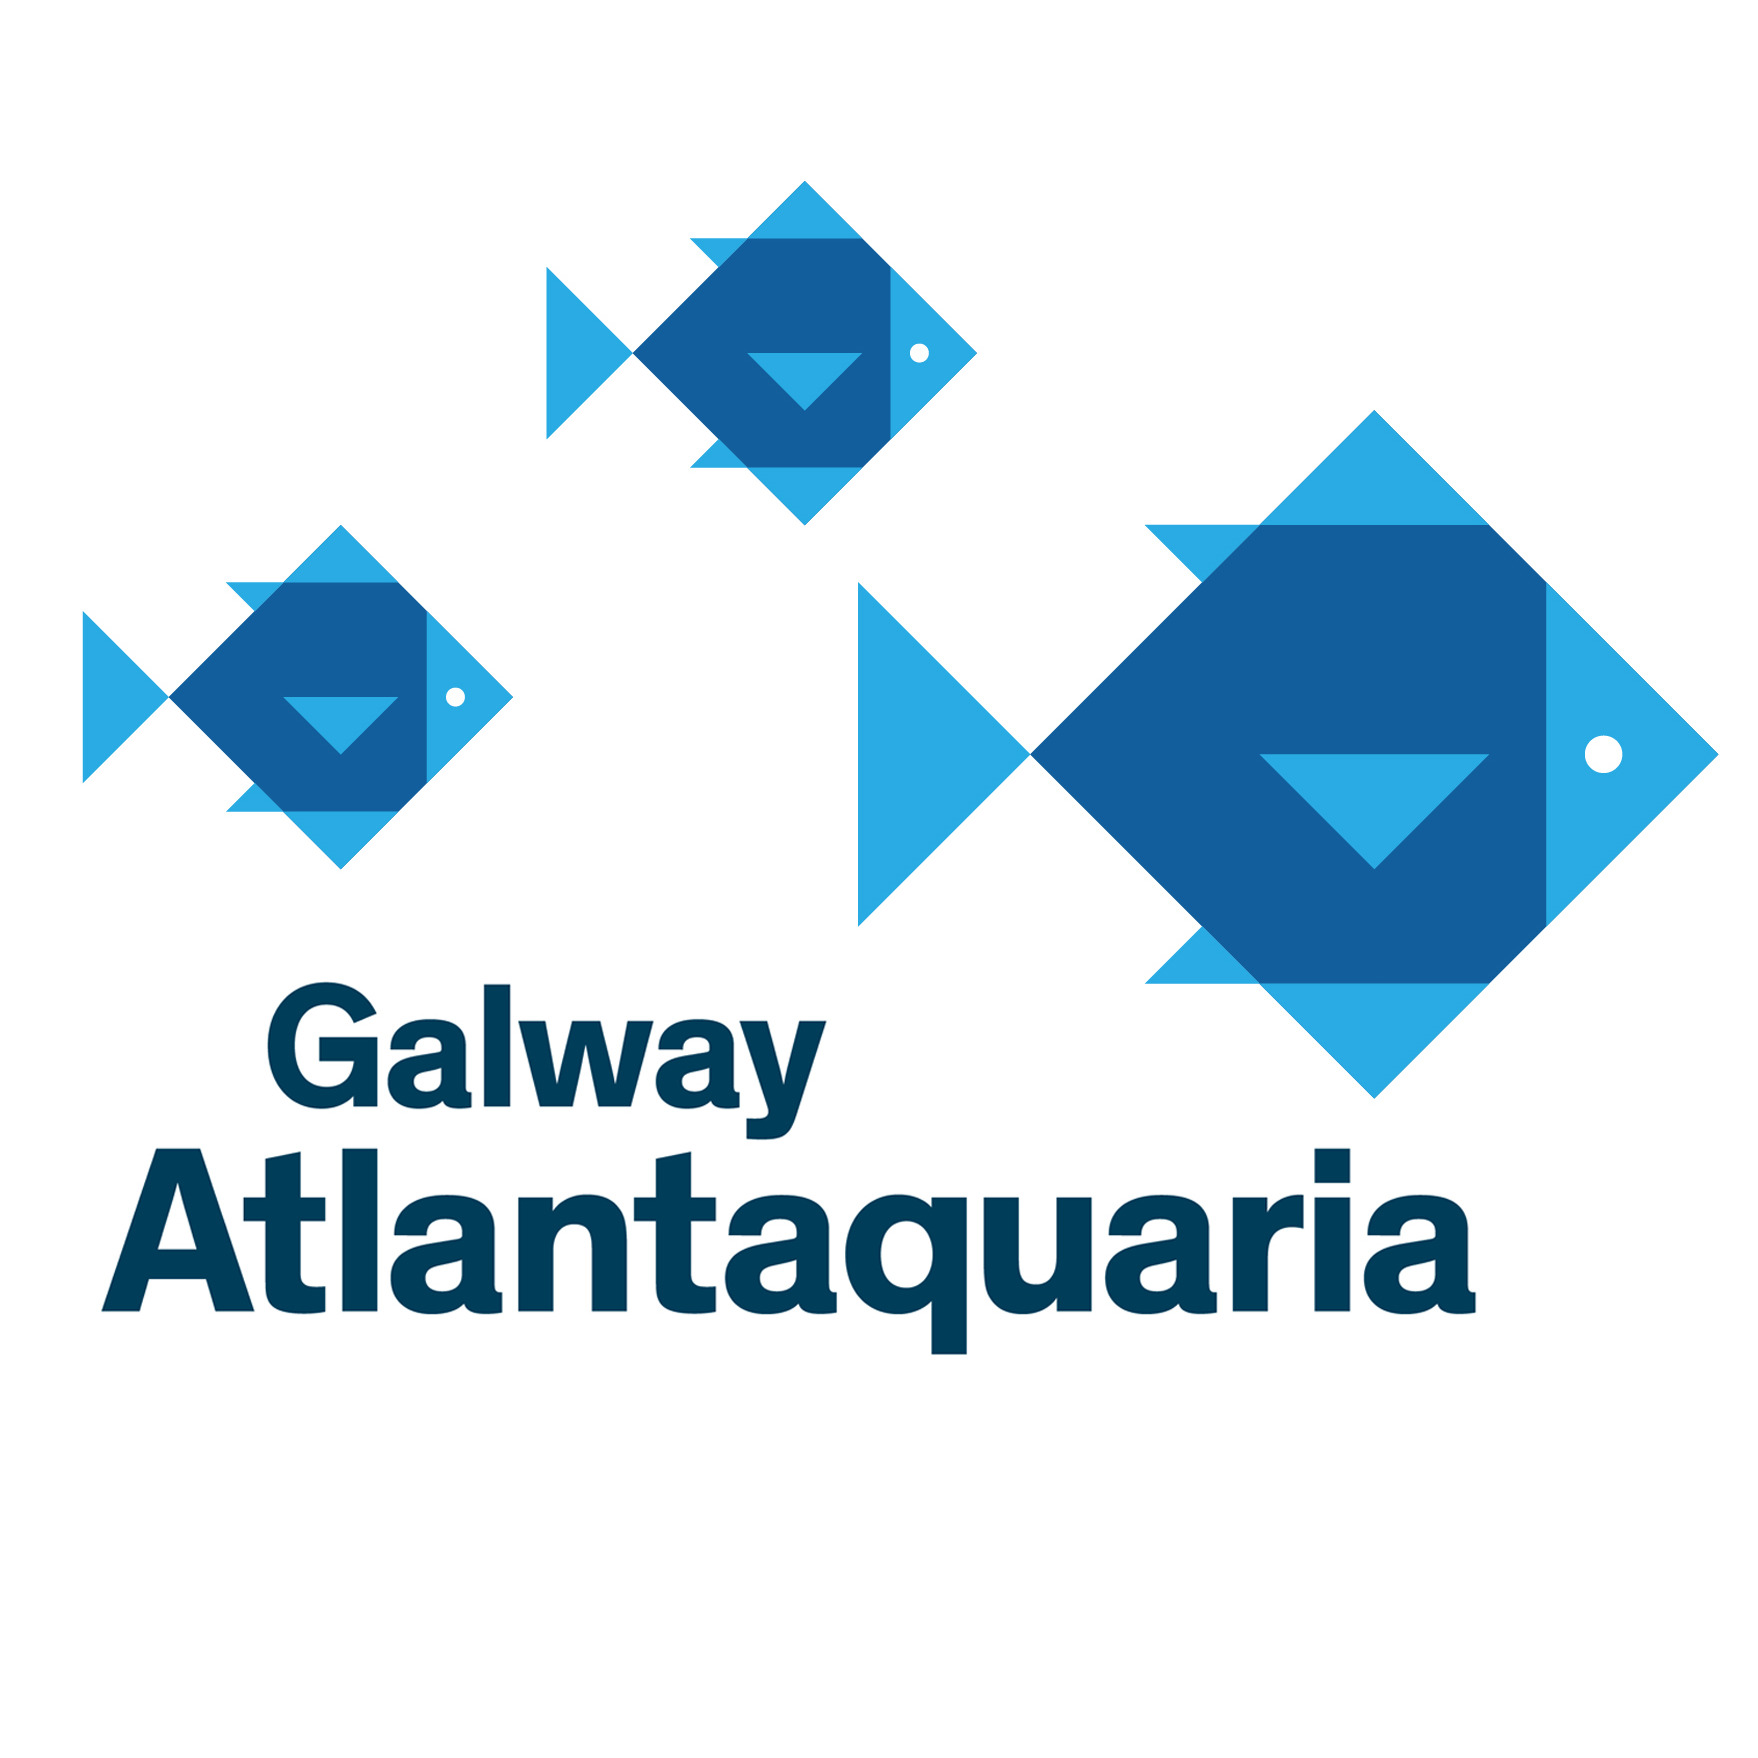 Galway Atlantaquaria logo